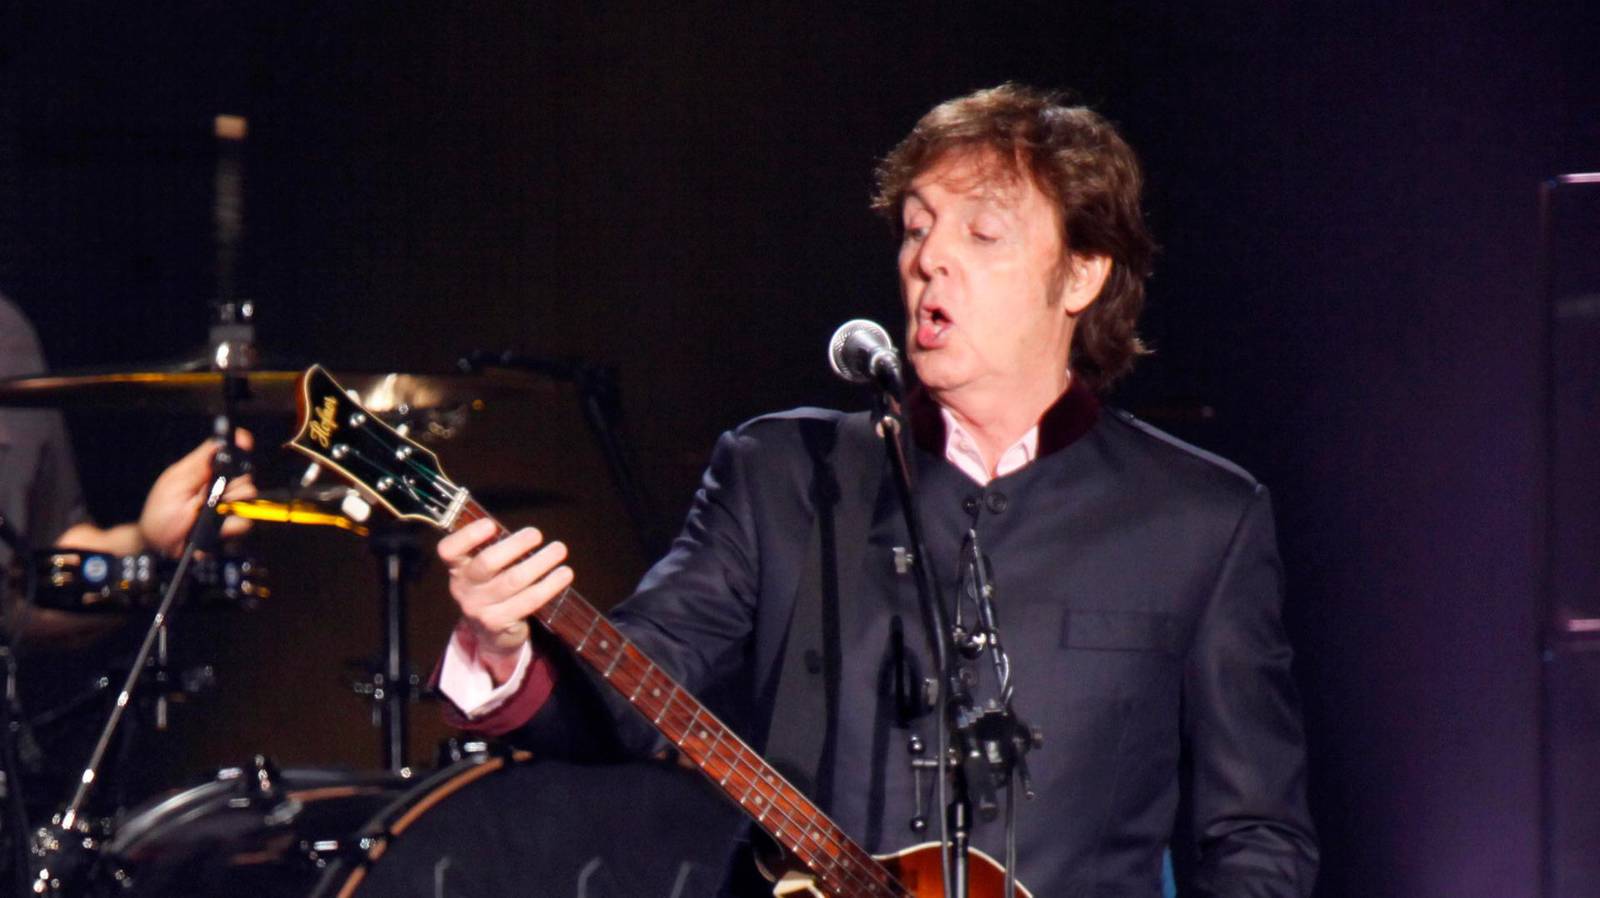 Coronavirus: Paul McCartney urges closure of China’s ‘obscene’ wet markets